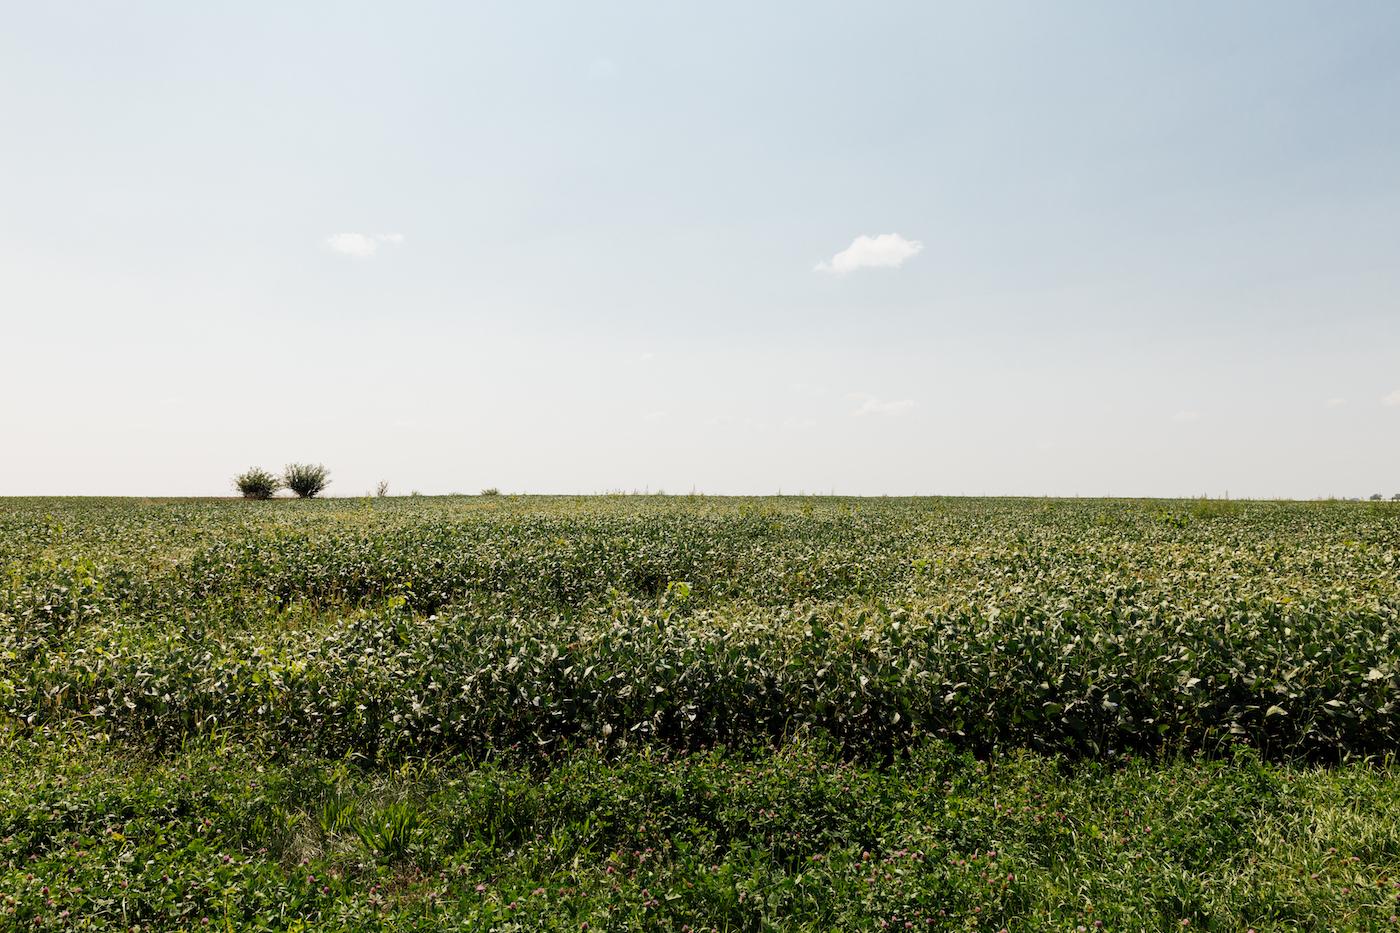 A soybean field under a blue sky